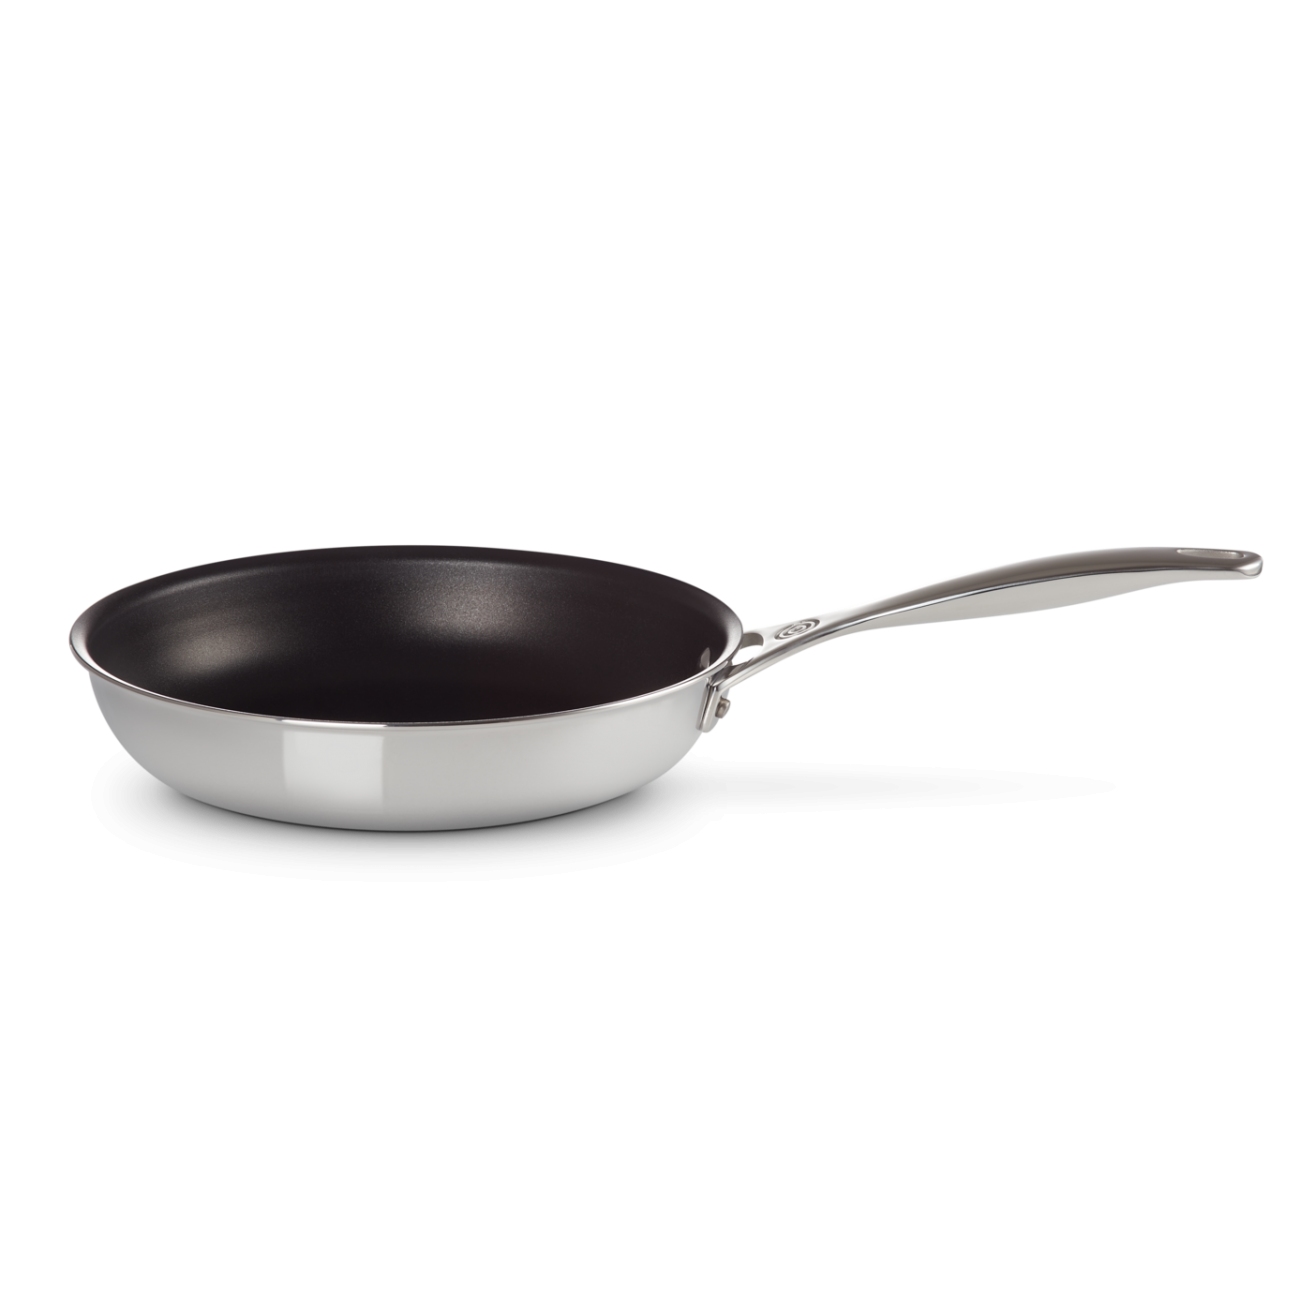 Turk Wrought Iron Frying Pan with High Rim, 24 cm